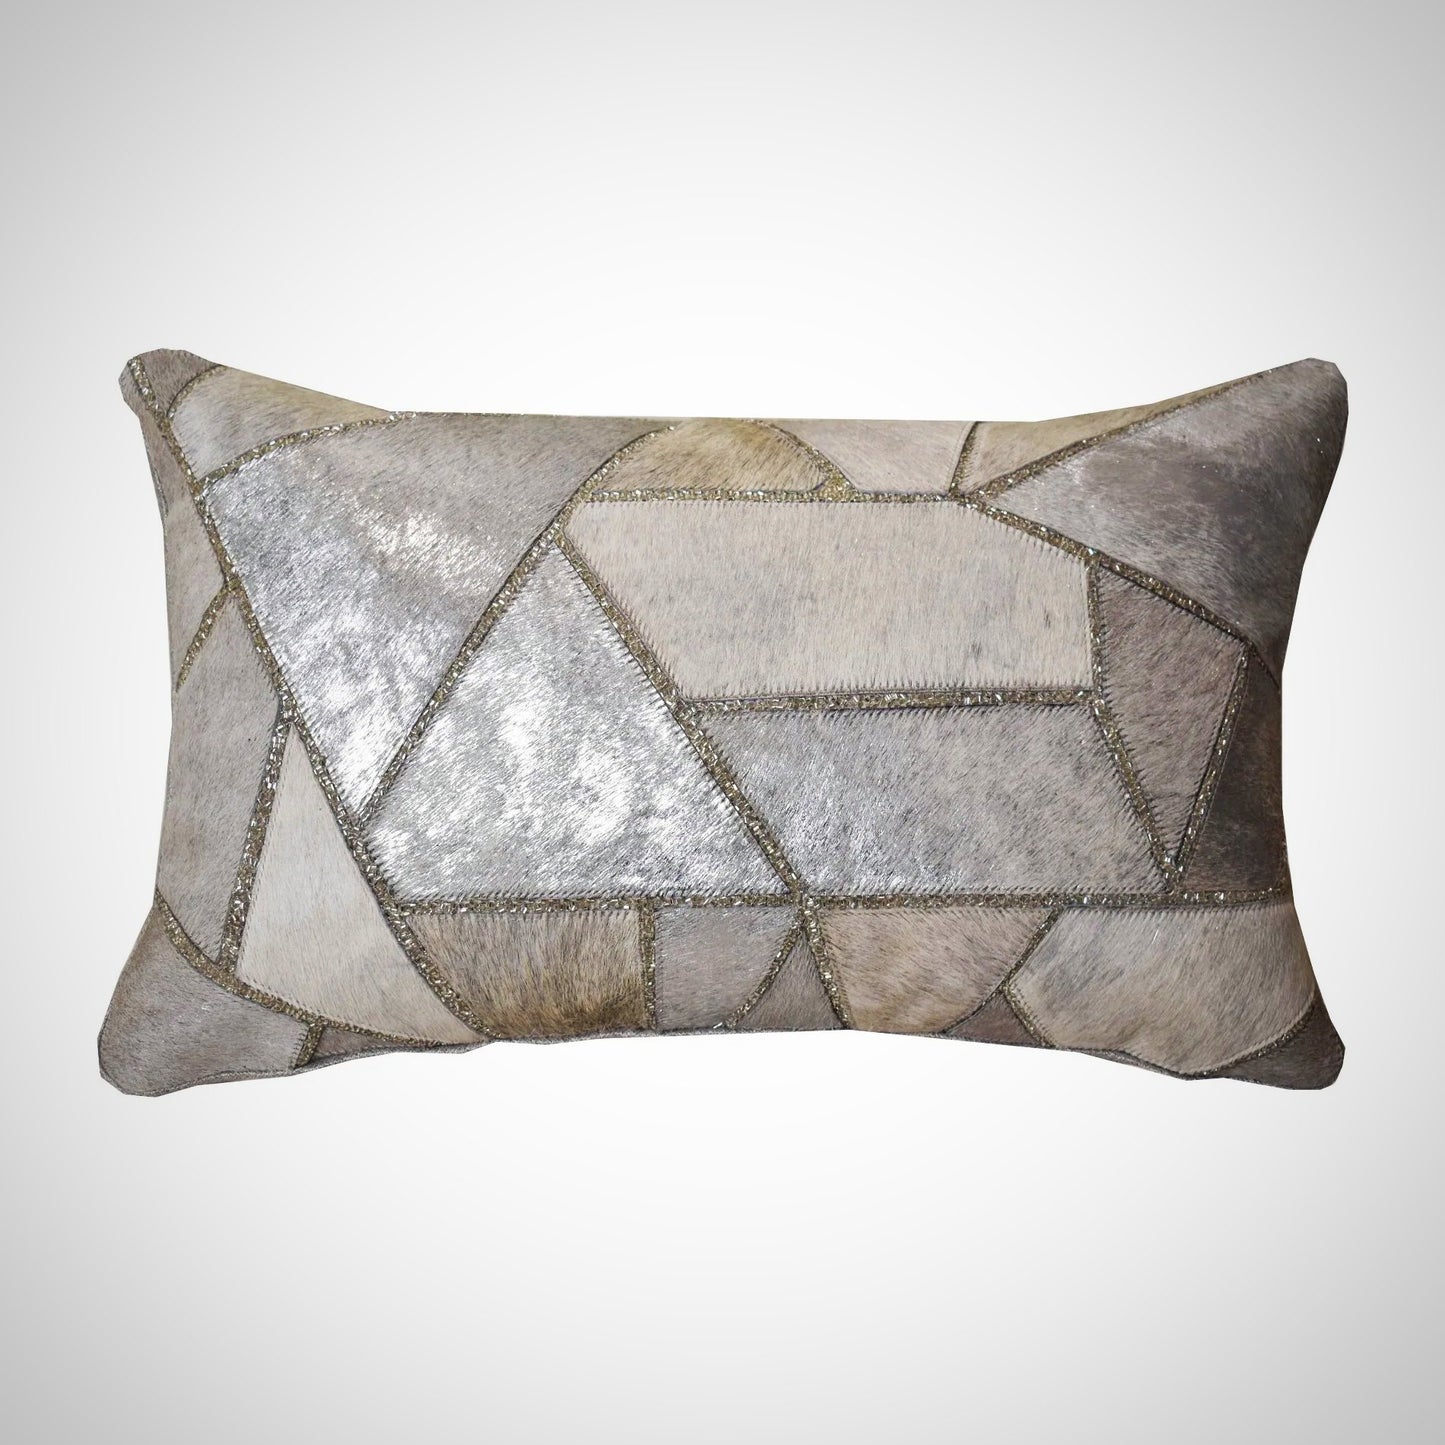 Patchny 20x12" Leather, Decorative Pillow